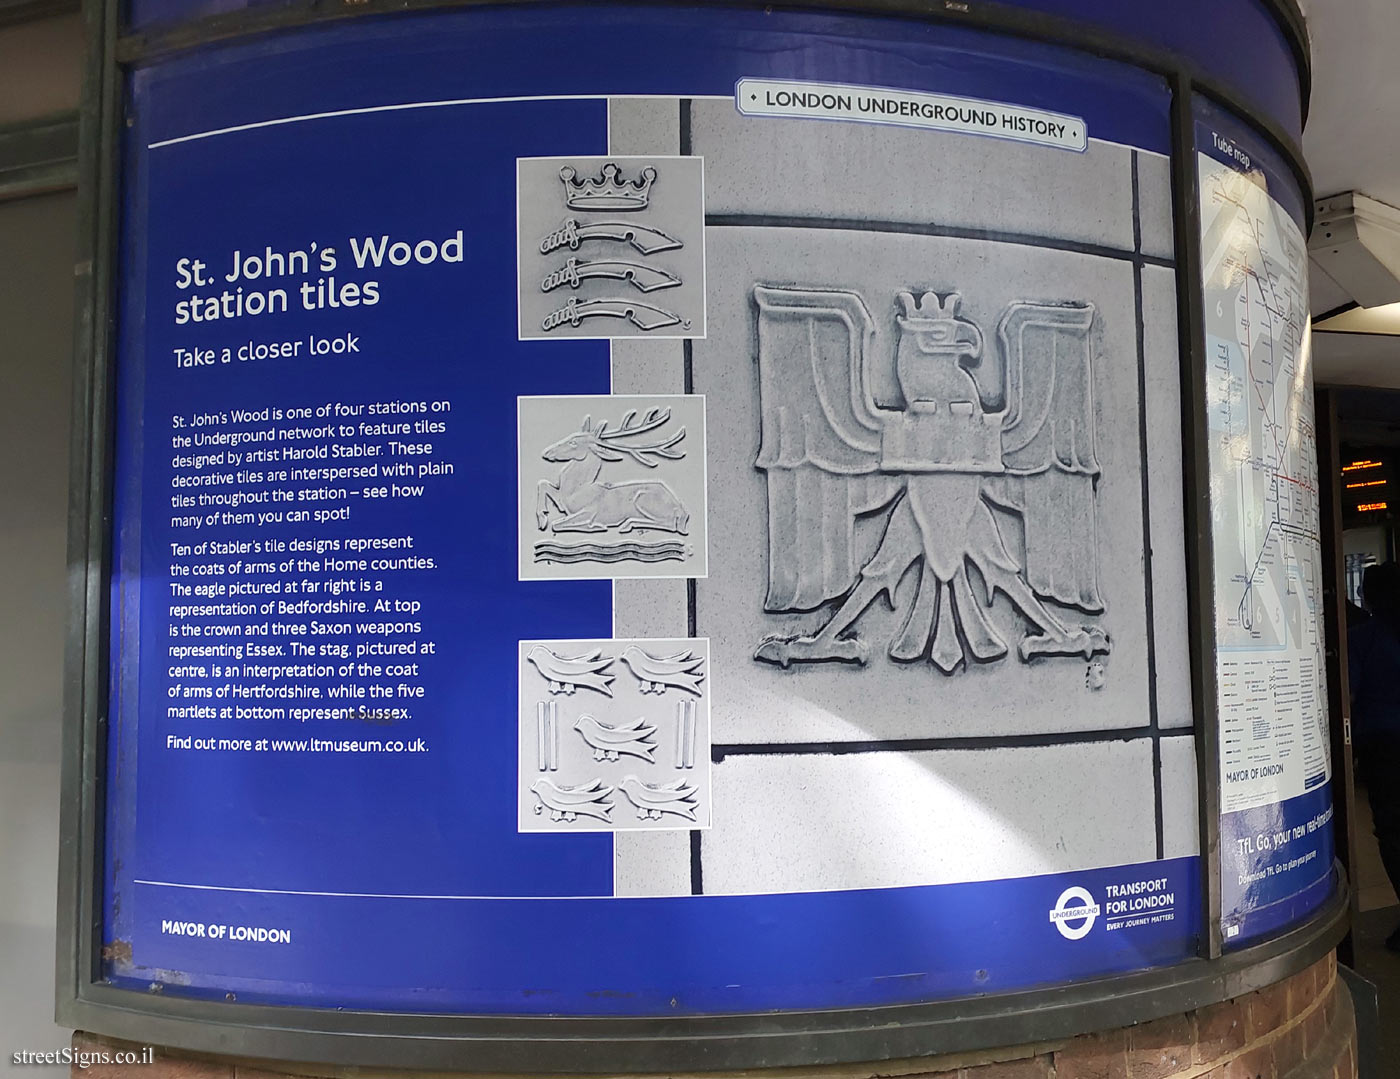 London -  London Underground History - St. John’s Wood station tiles